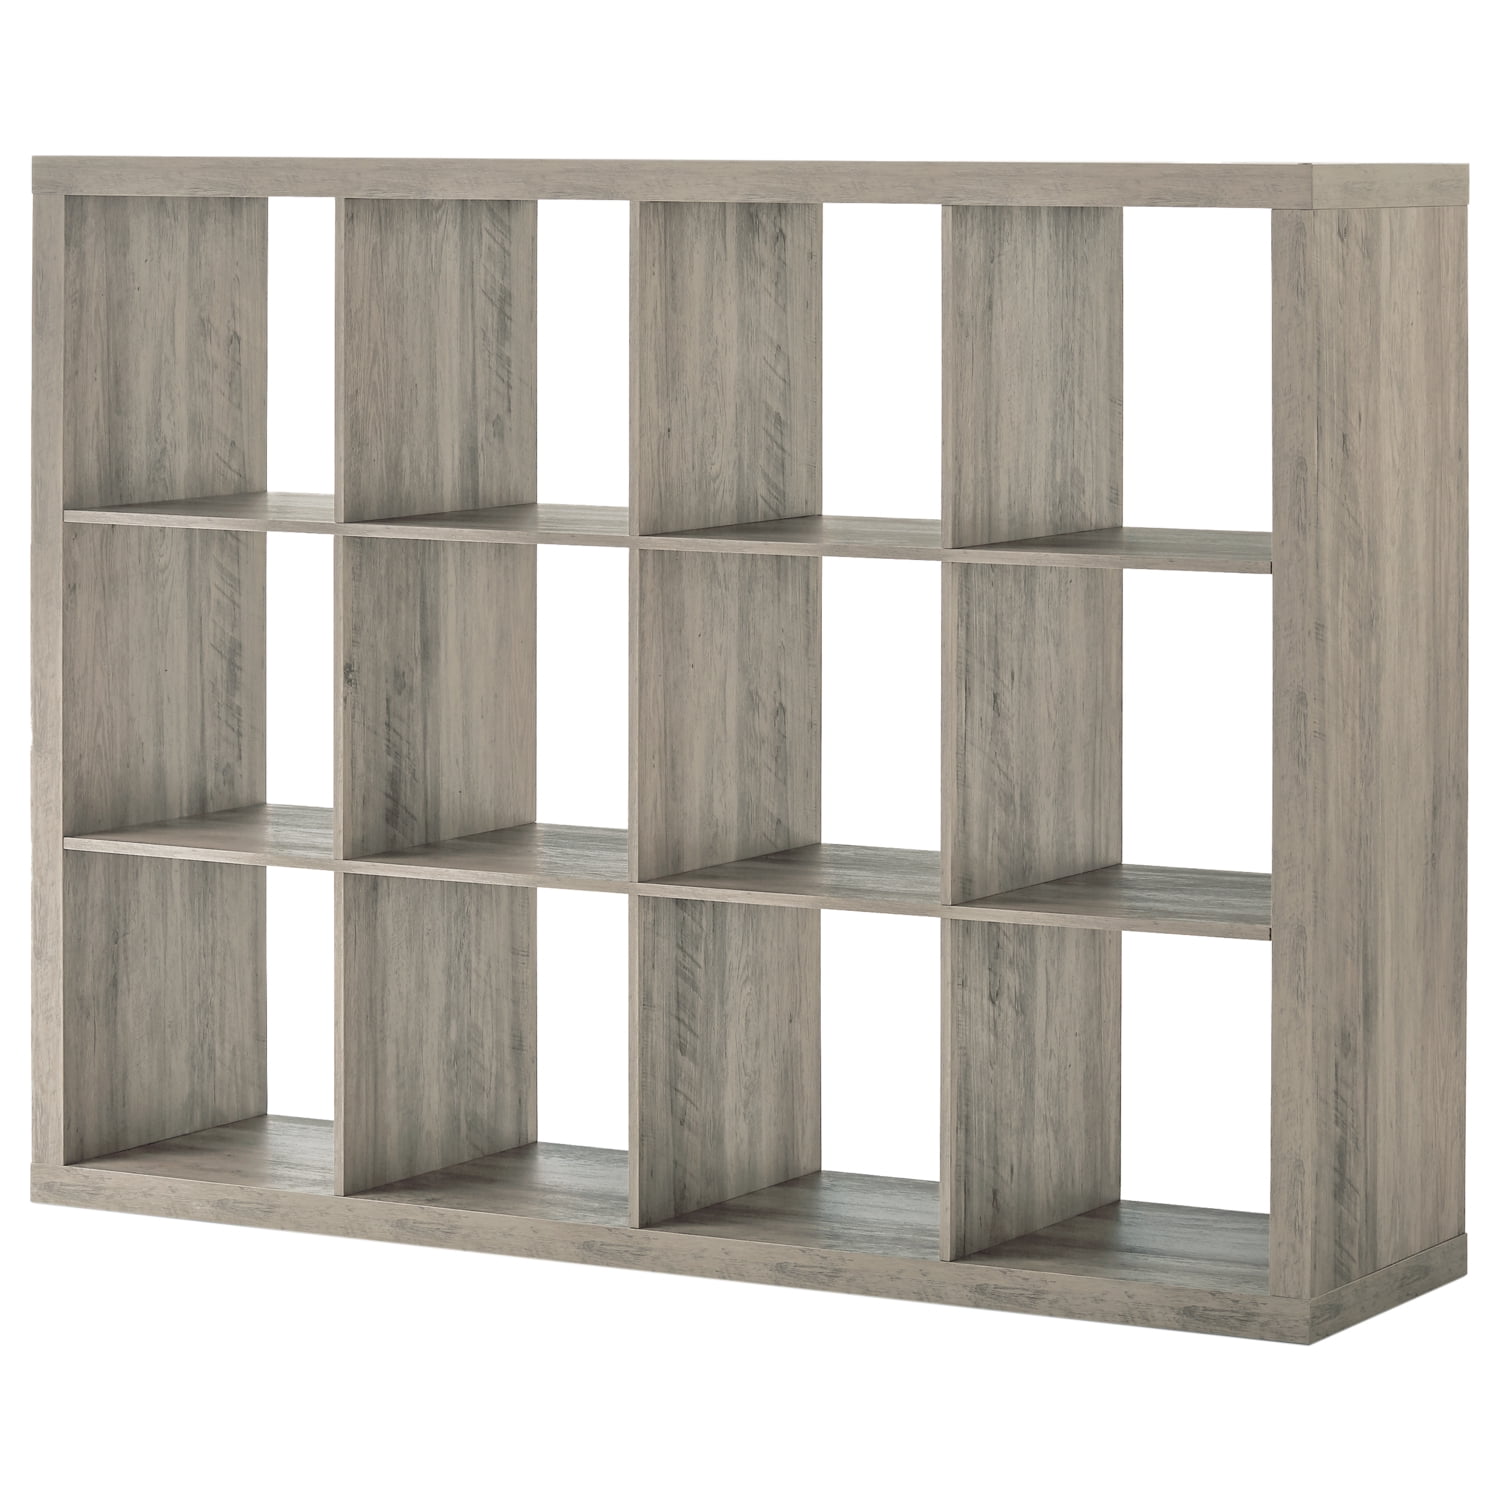 Better Homes & Gardens 12-Cube Storage Organizer, Rustic Gray